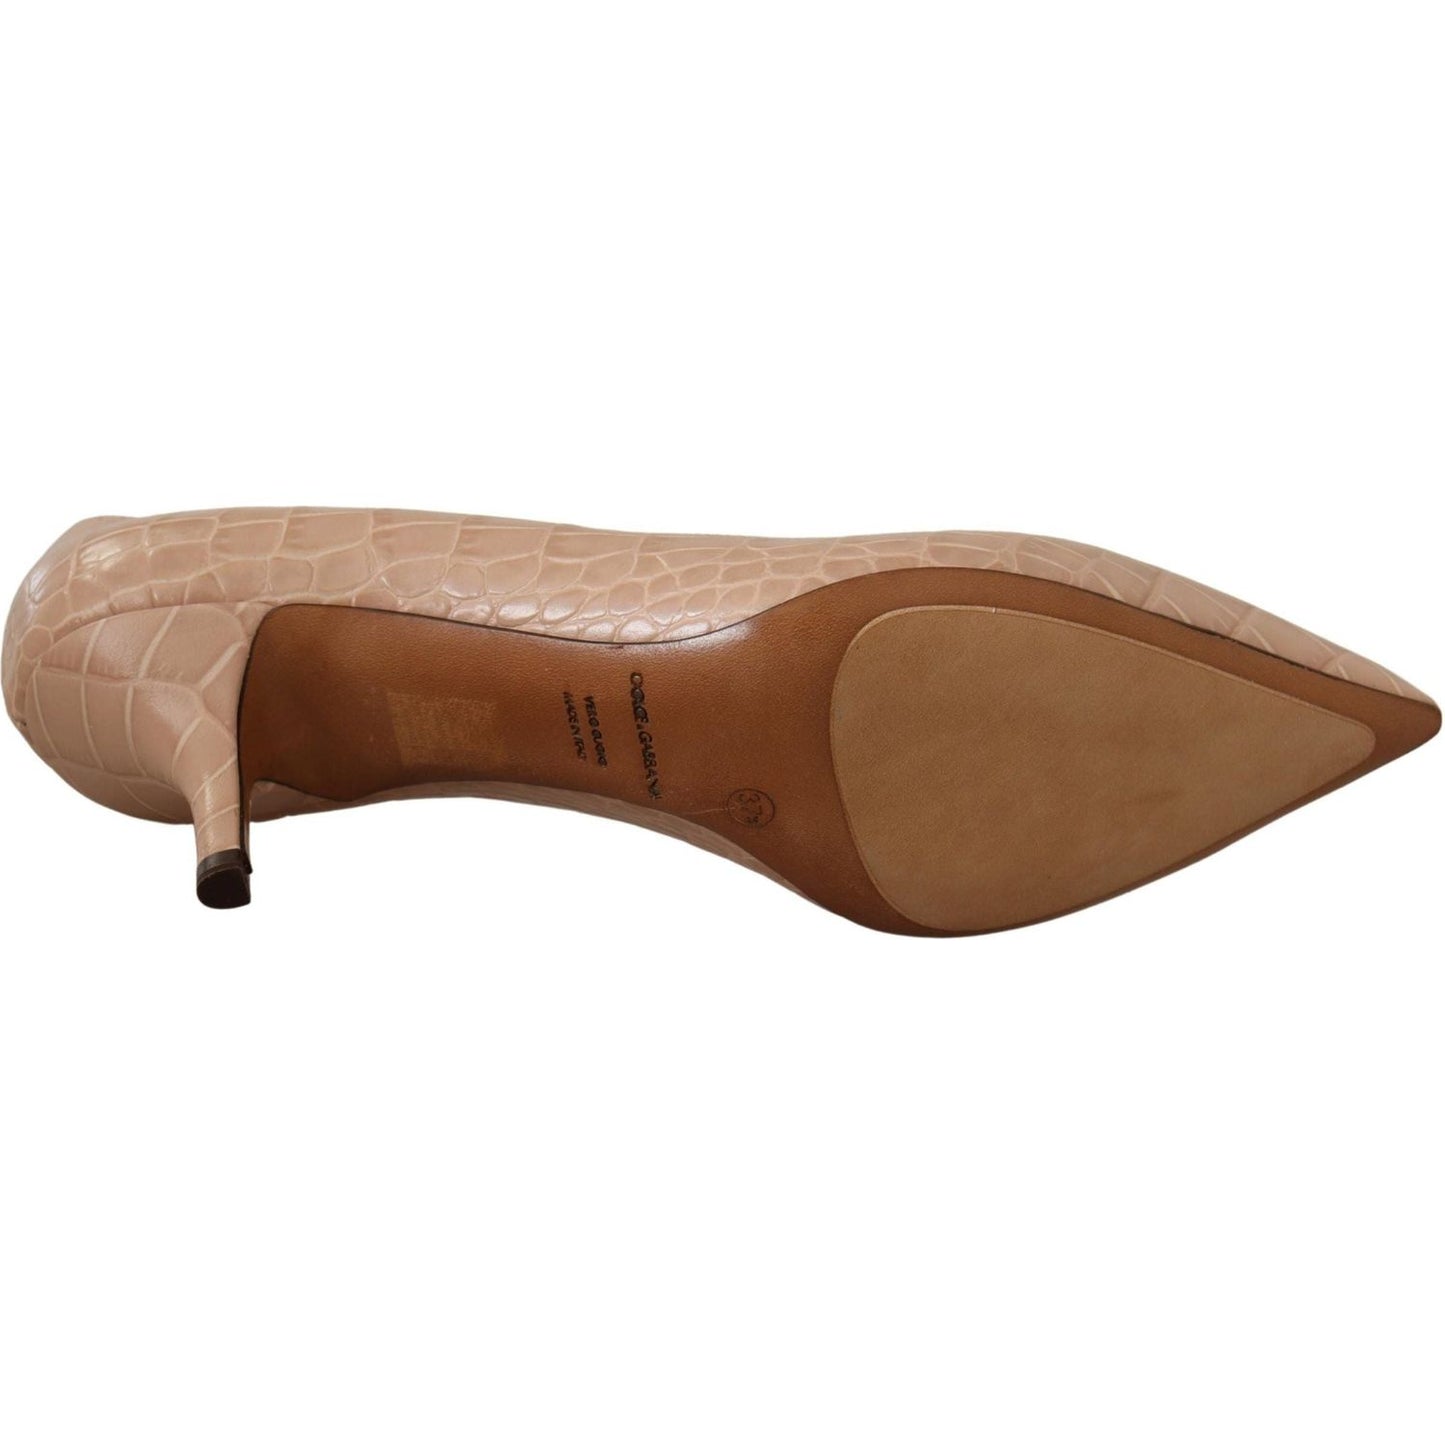 Dolce & Gabbana Elegant Beige Leather Pumps beige-leather-pointed-heels-pumps-shoes IMG_0730-scaled-bb360153-537.jpg